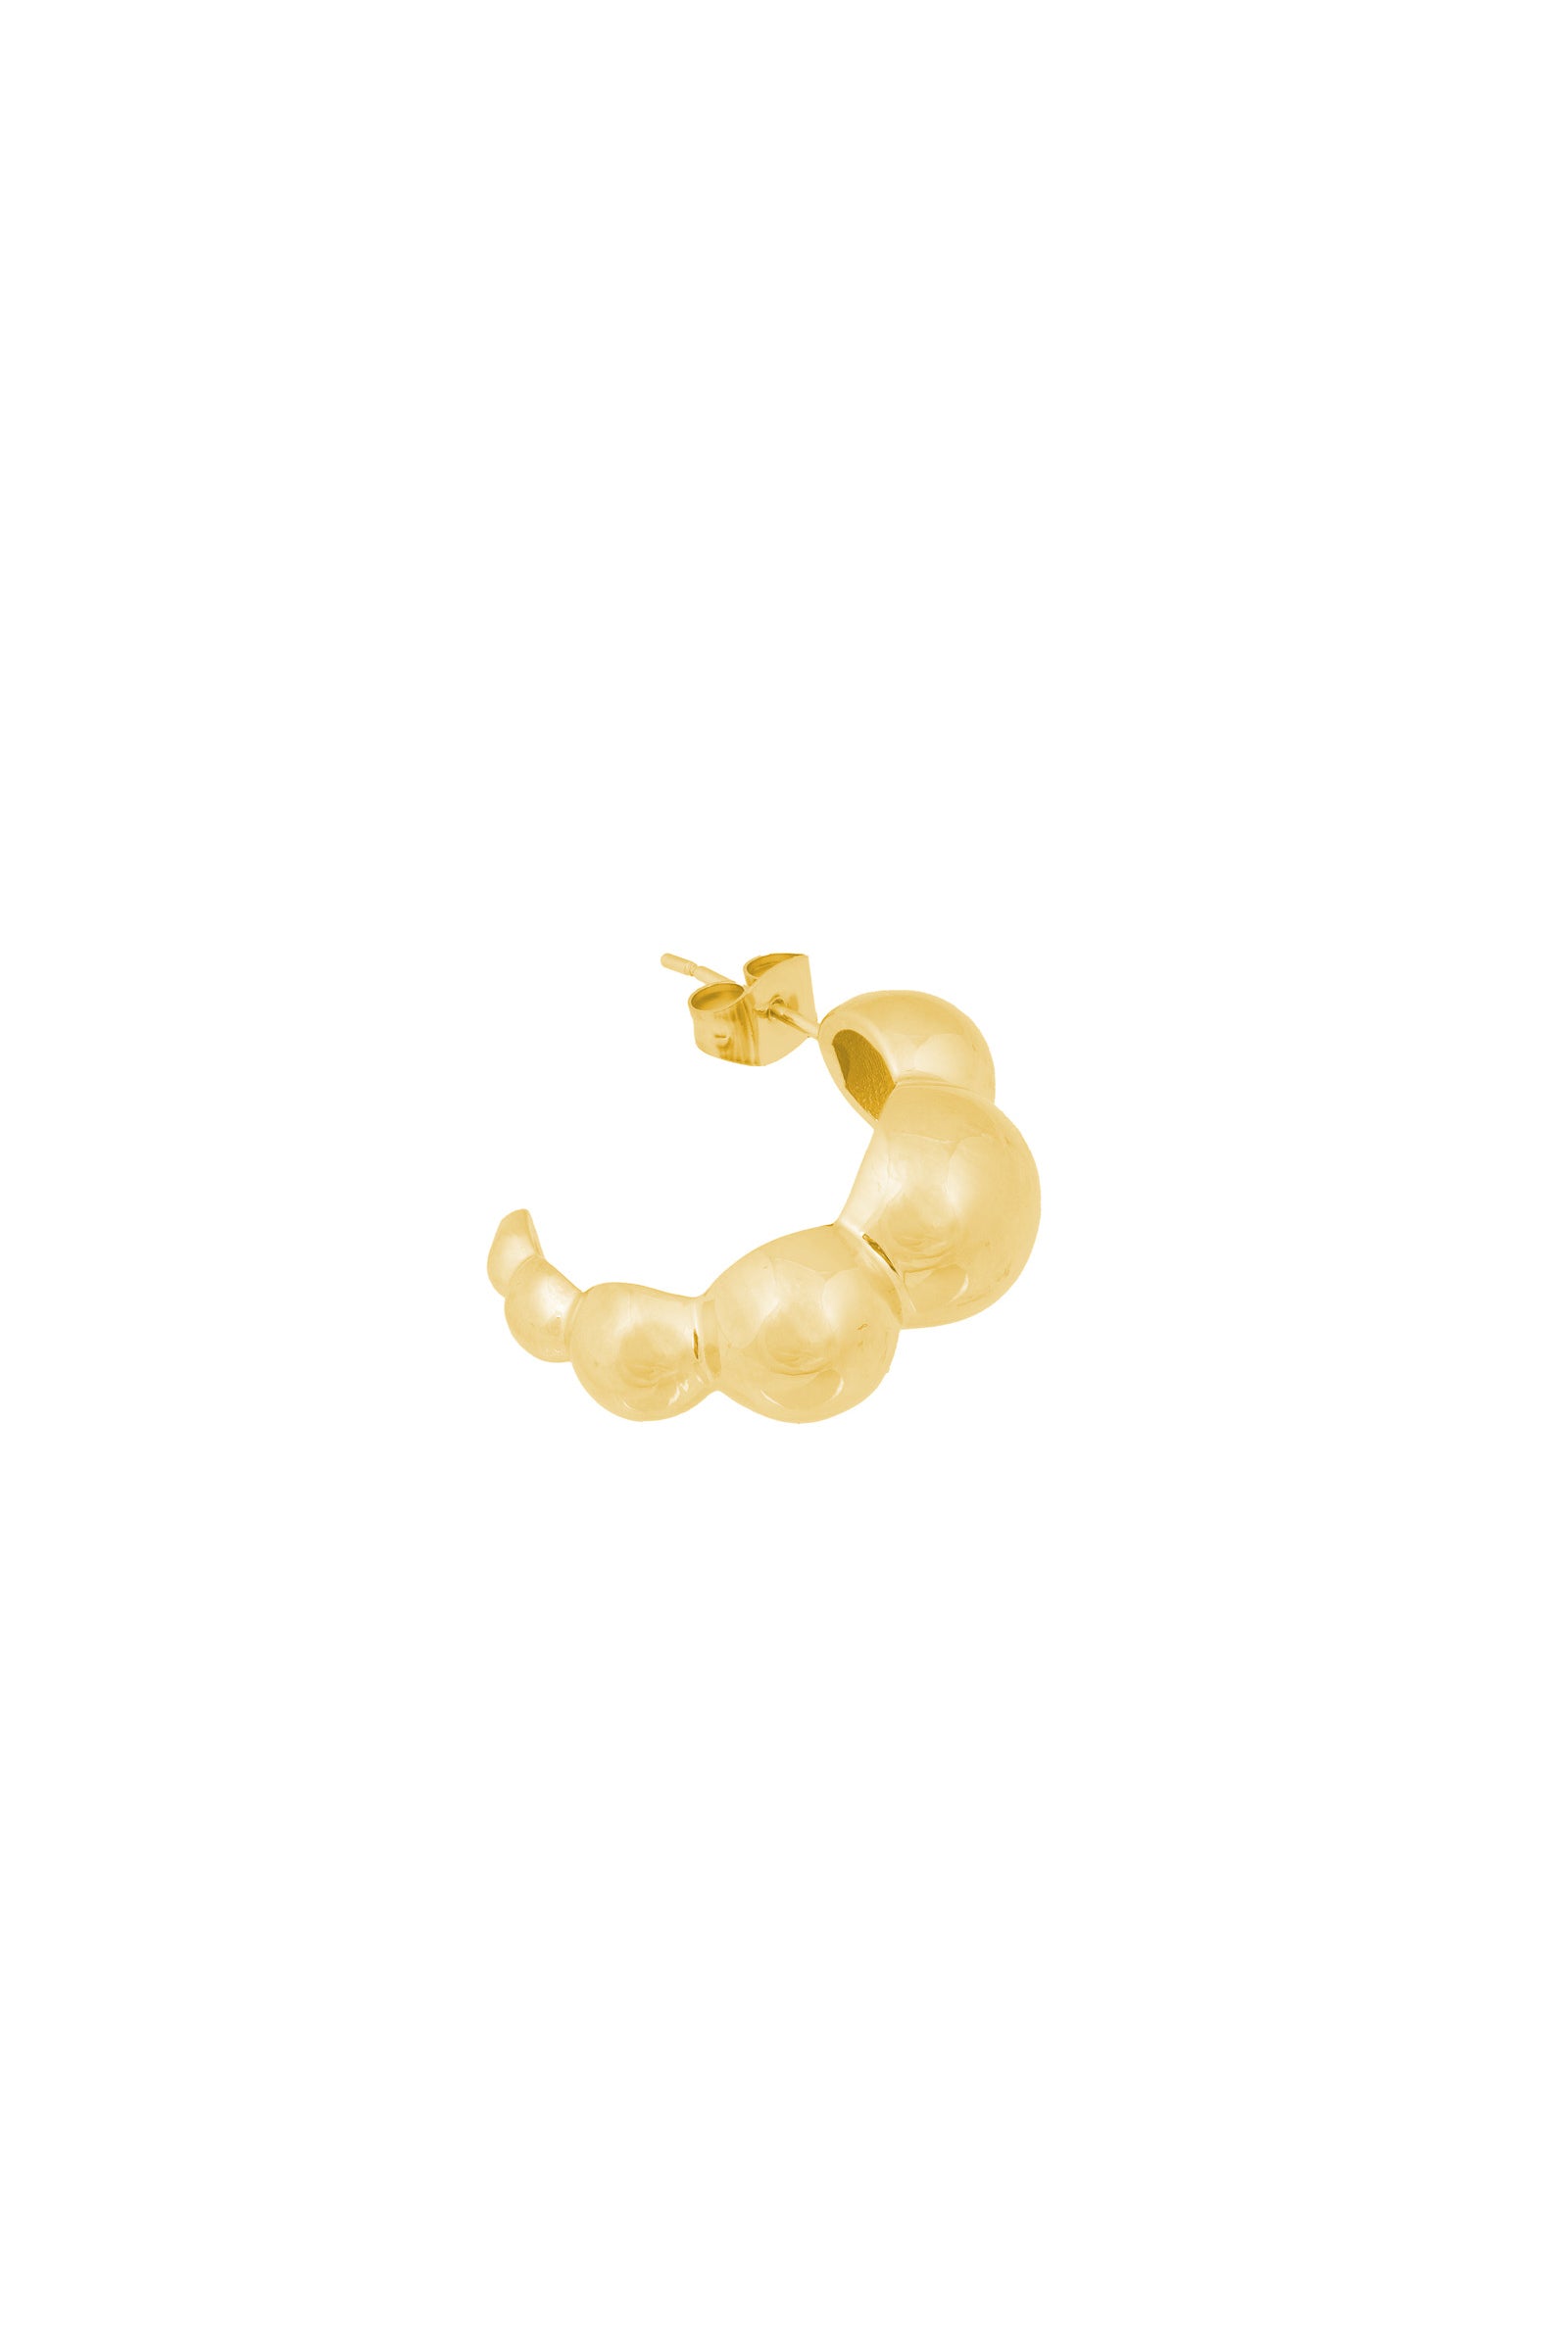 Bandhu Dot Earrings - Gold - RUM Amsterdam